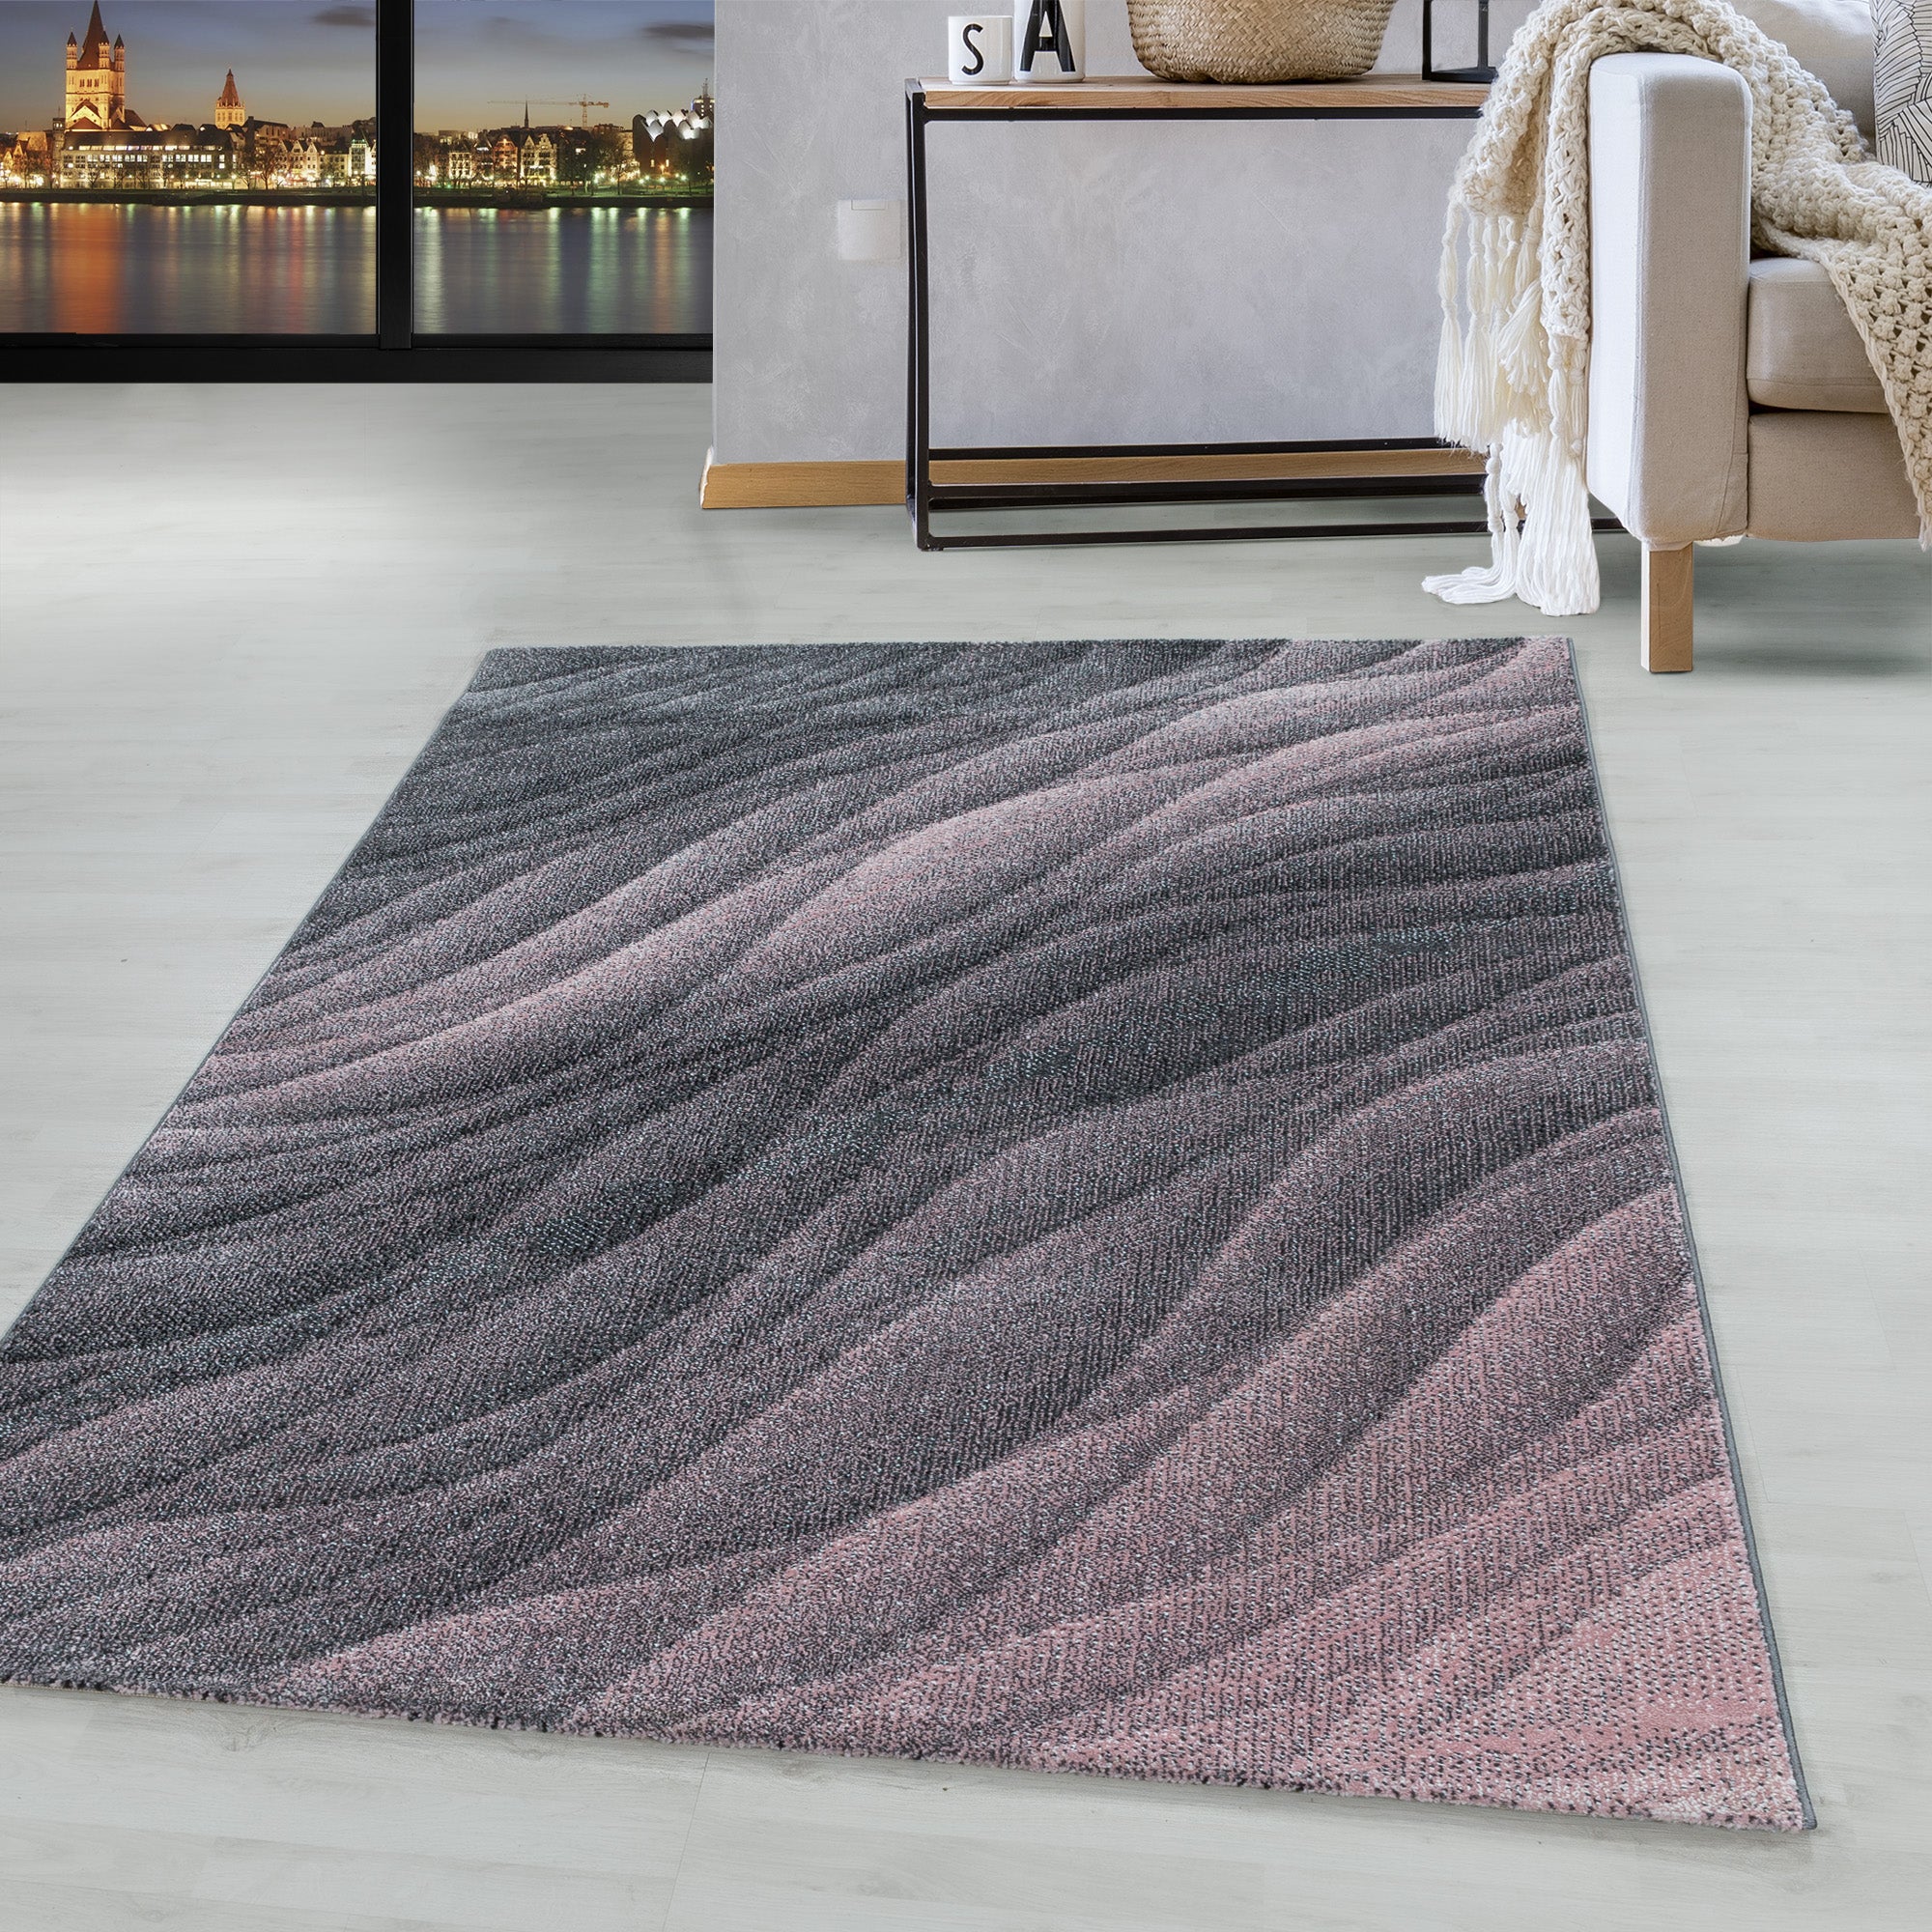 Kurzflor Teppich Wohntepp HomebyHome – Rosa Muster Grau Modern Linien Wellen Design